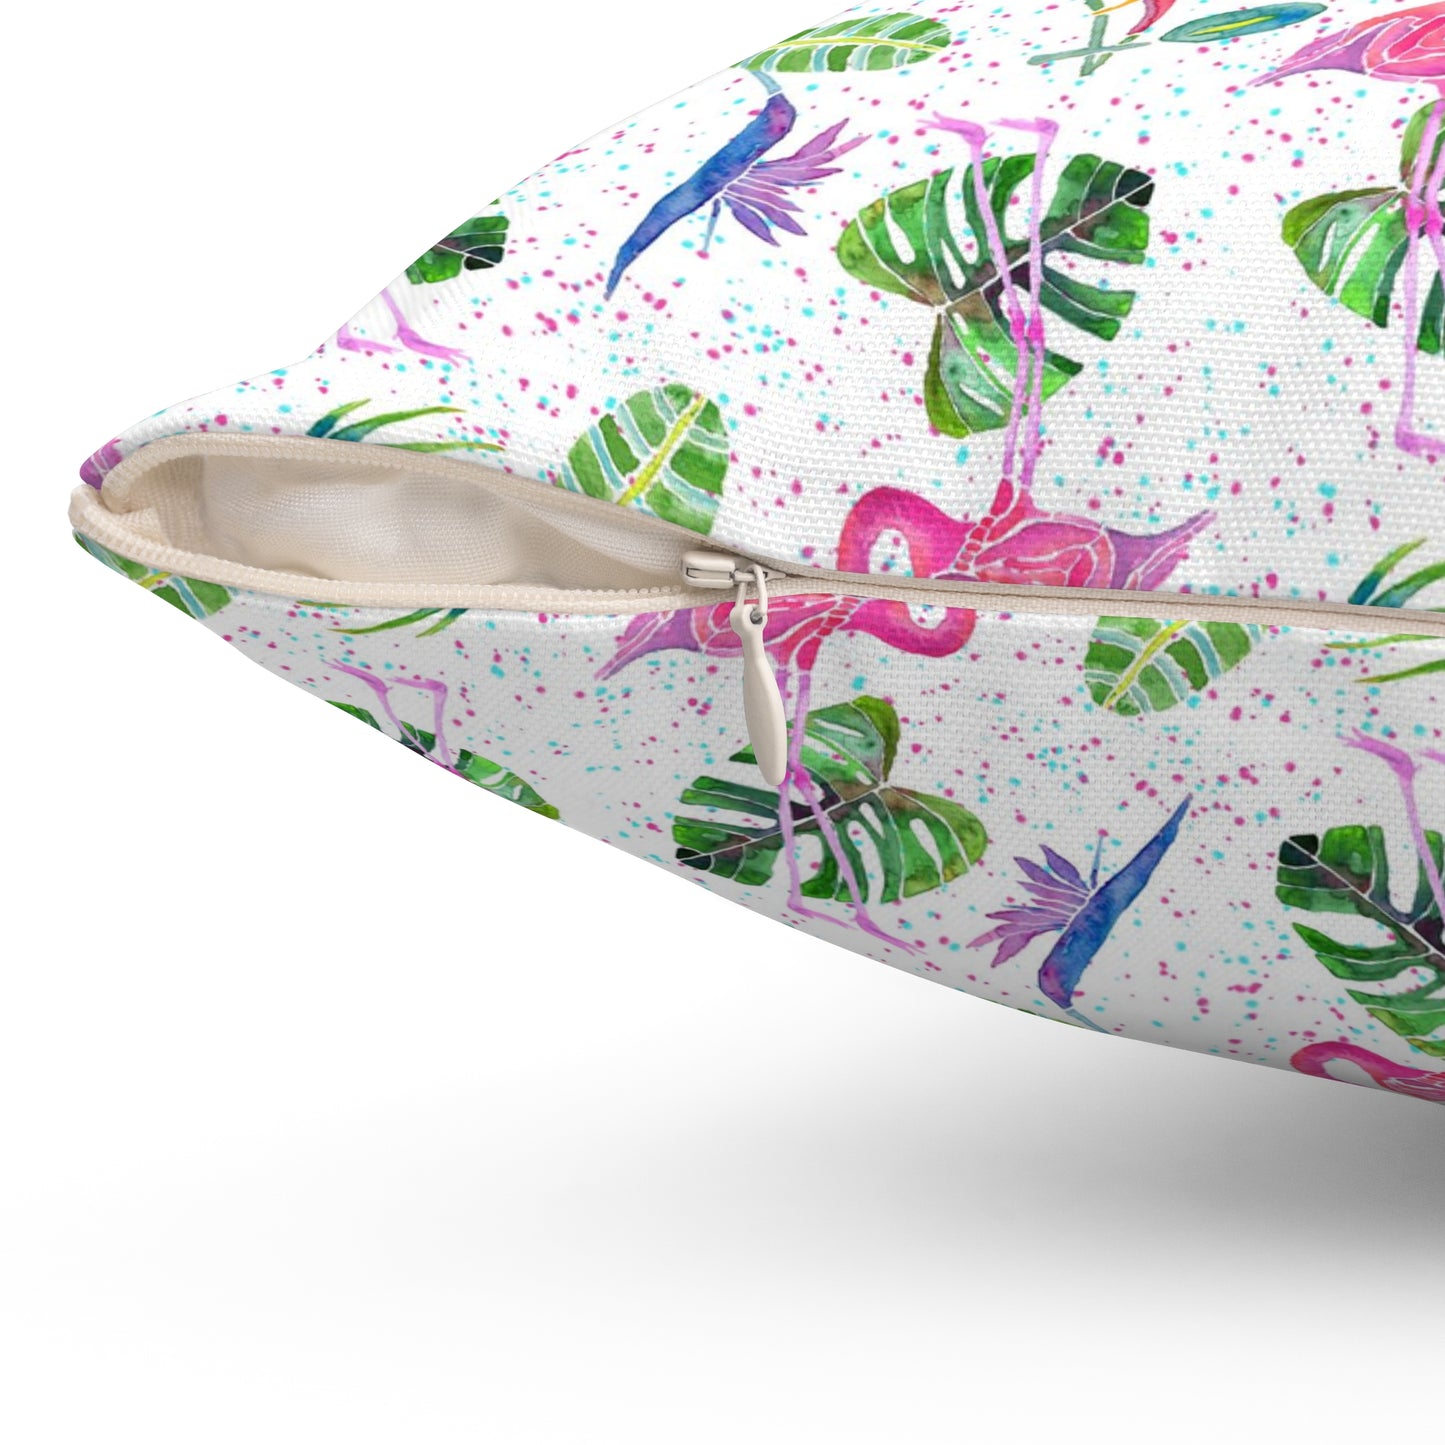 Flamingo Party Spun Polyester Square Pillow